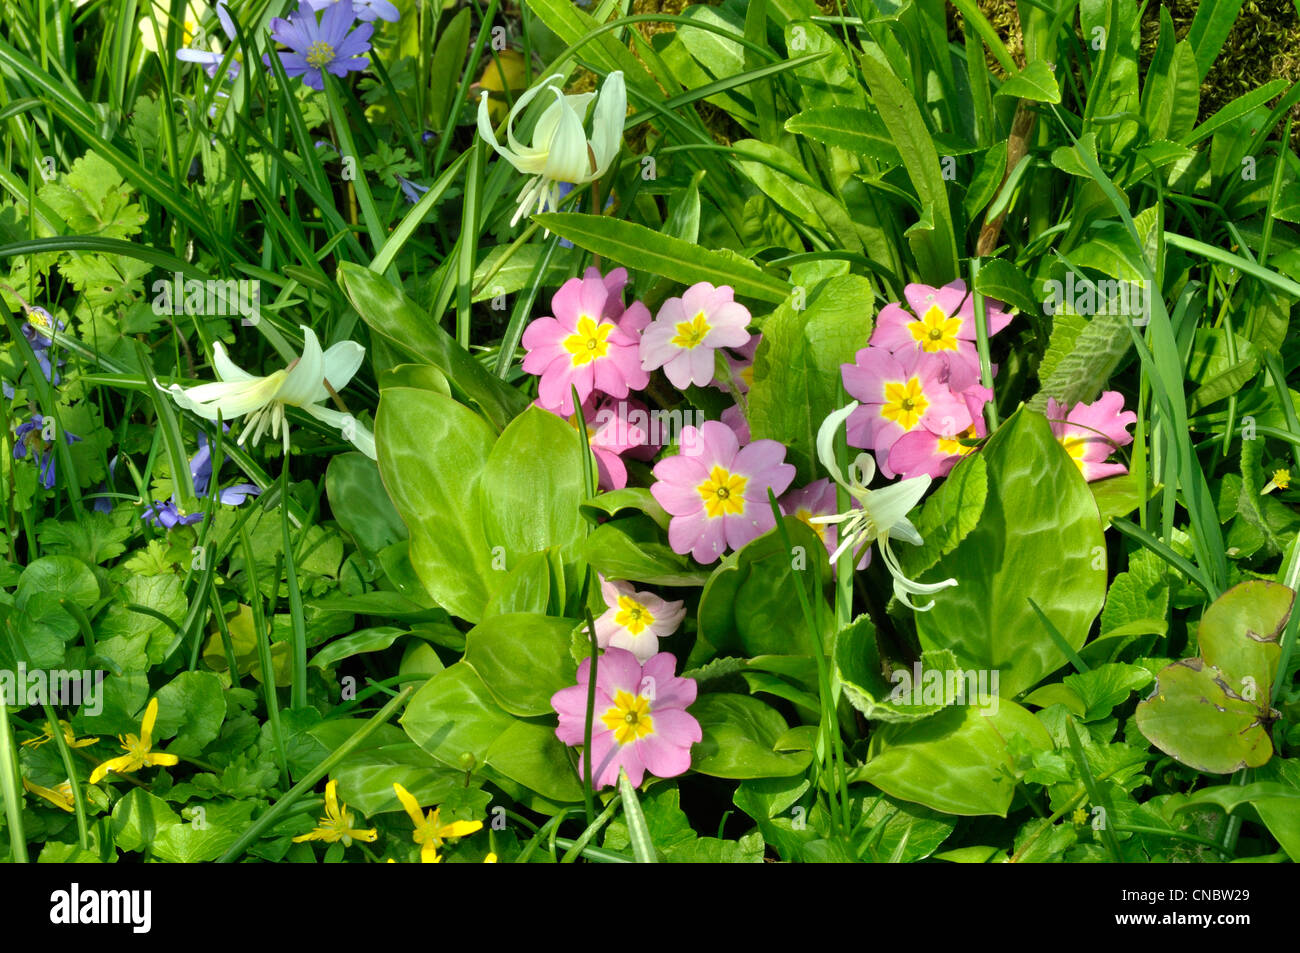 Primrose (Primula vulgaris) in full flower and Erythronium (White flowers and leaves). Stock Photo